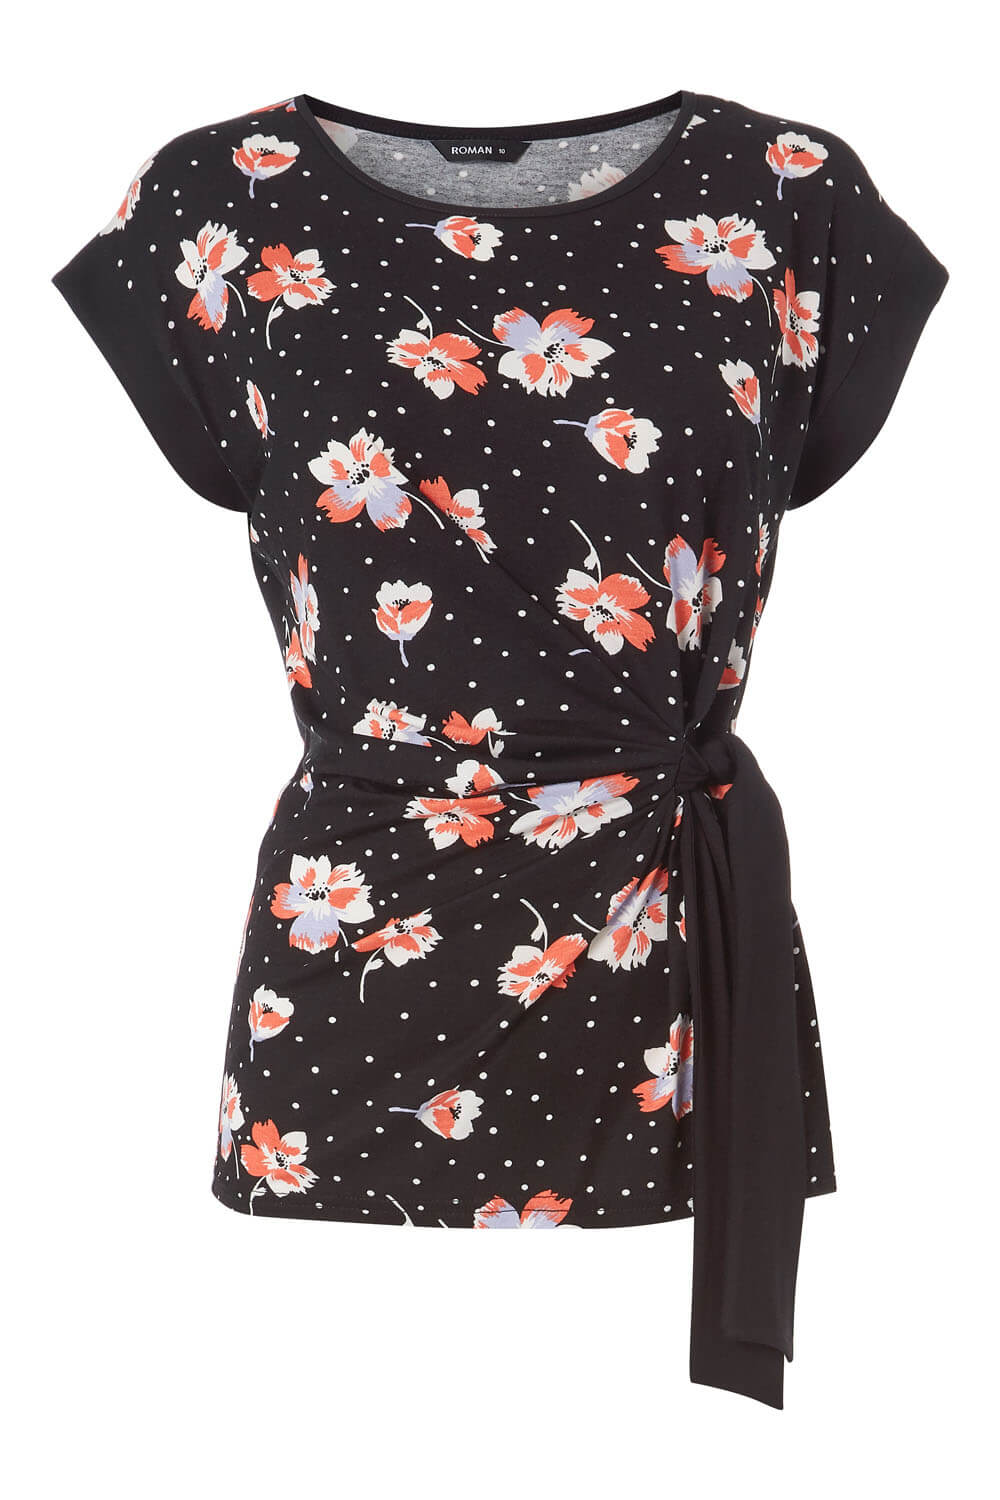 Black Floral Spot Print Side Tie Top, Image 3 of 3